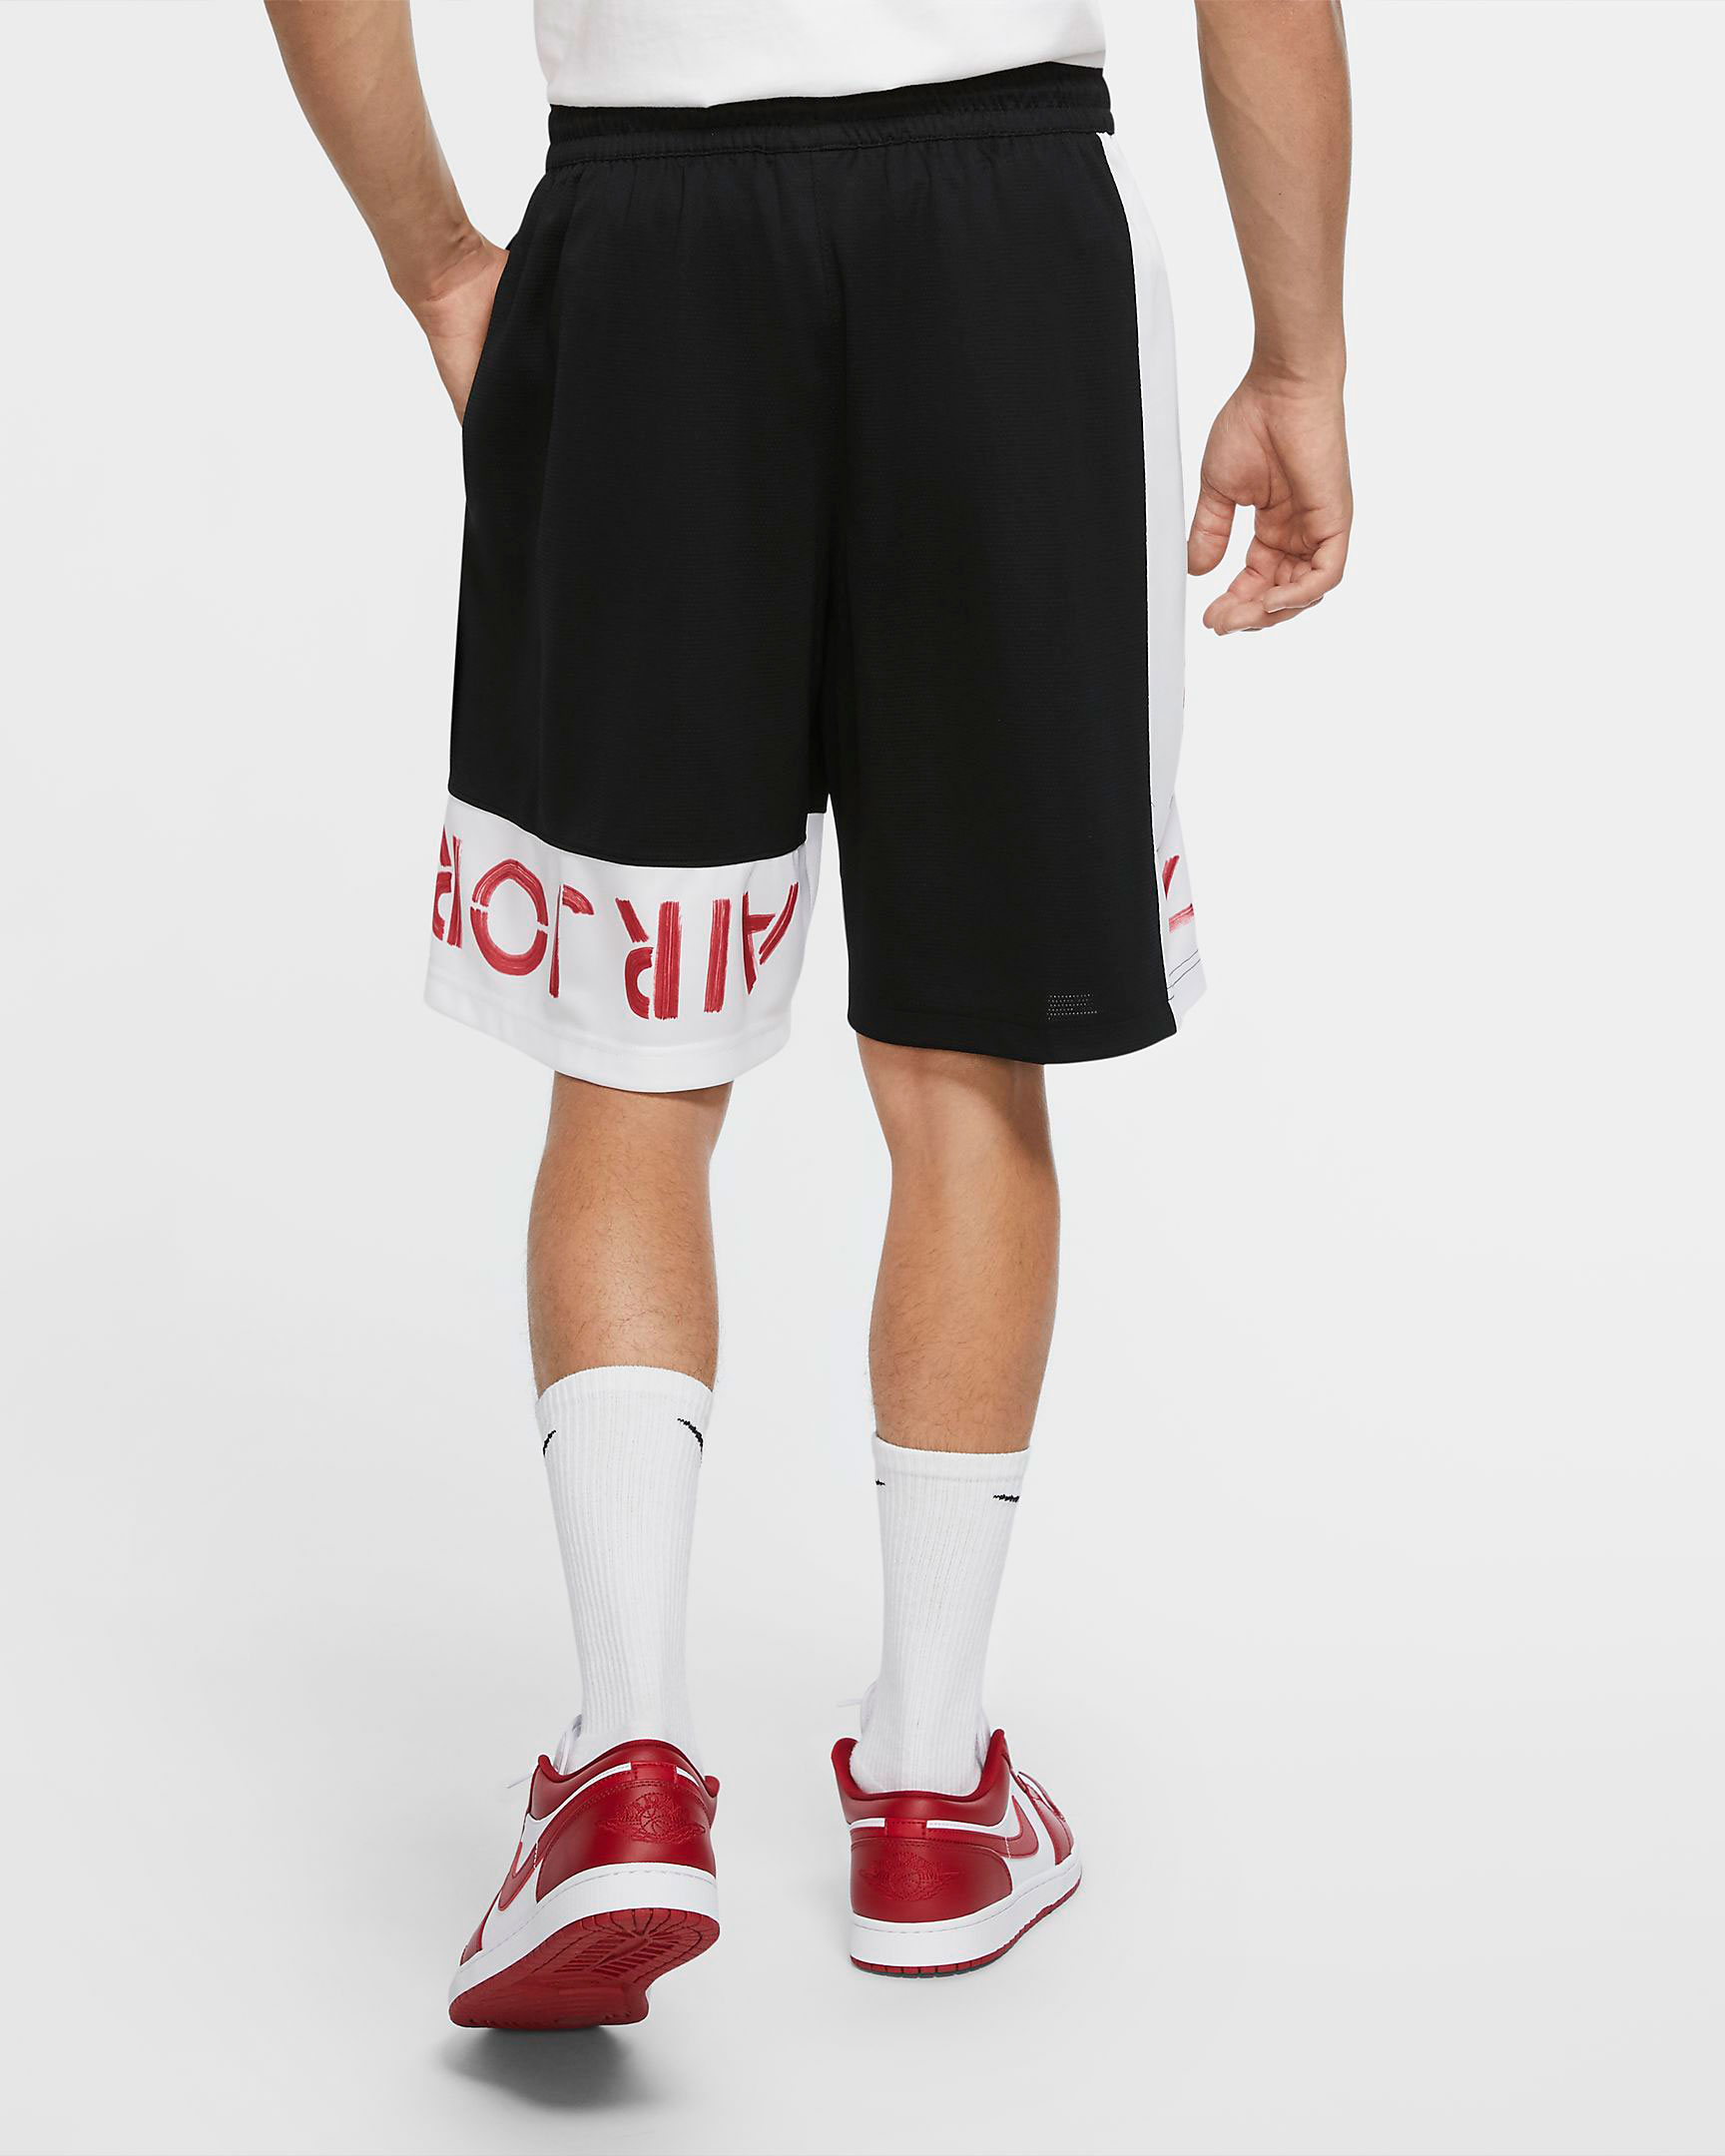 Air Jordan 11 Low White Black Red Shorts | SneakerFits.com